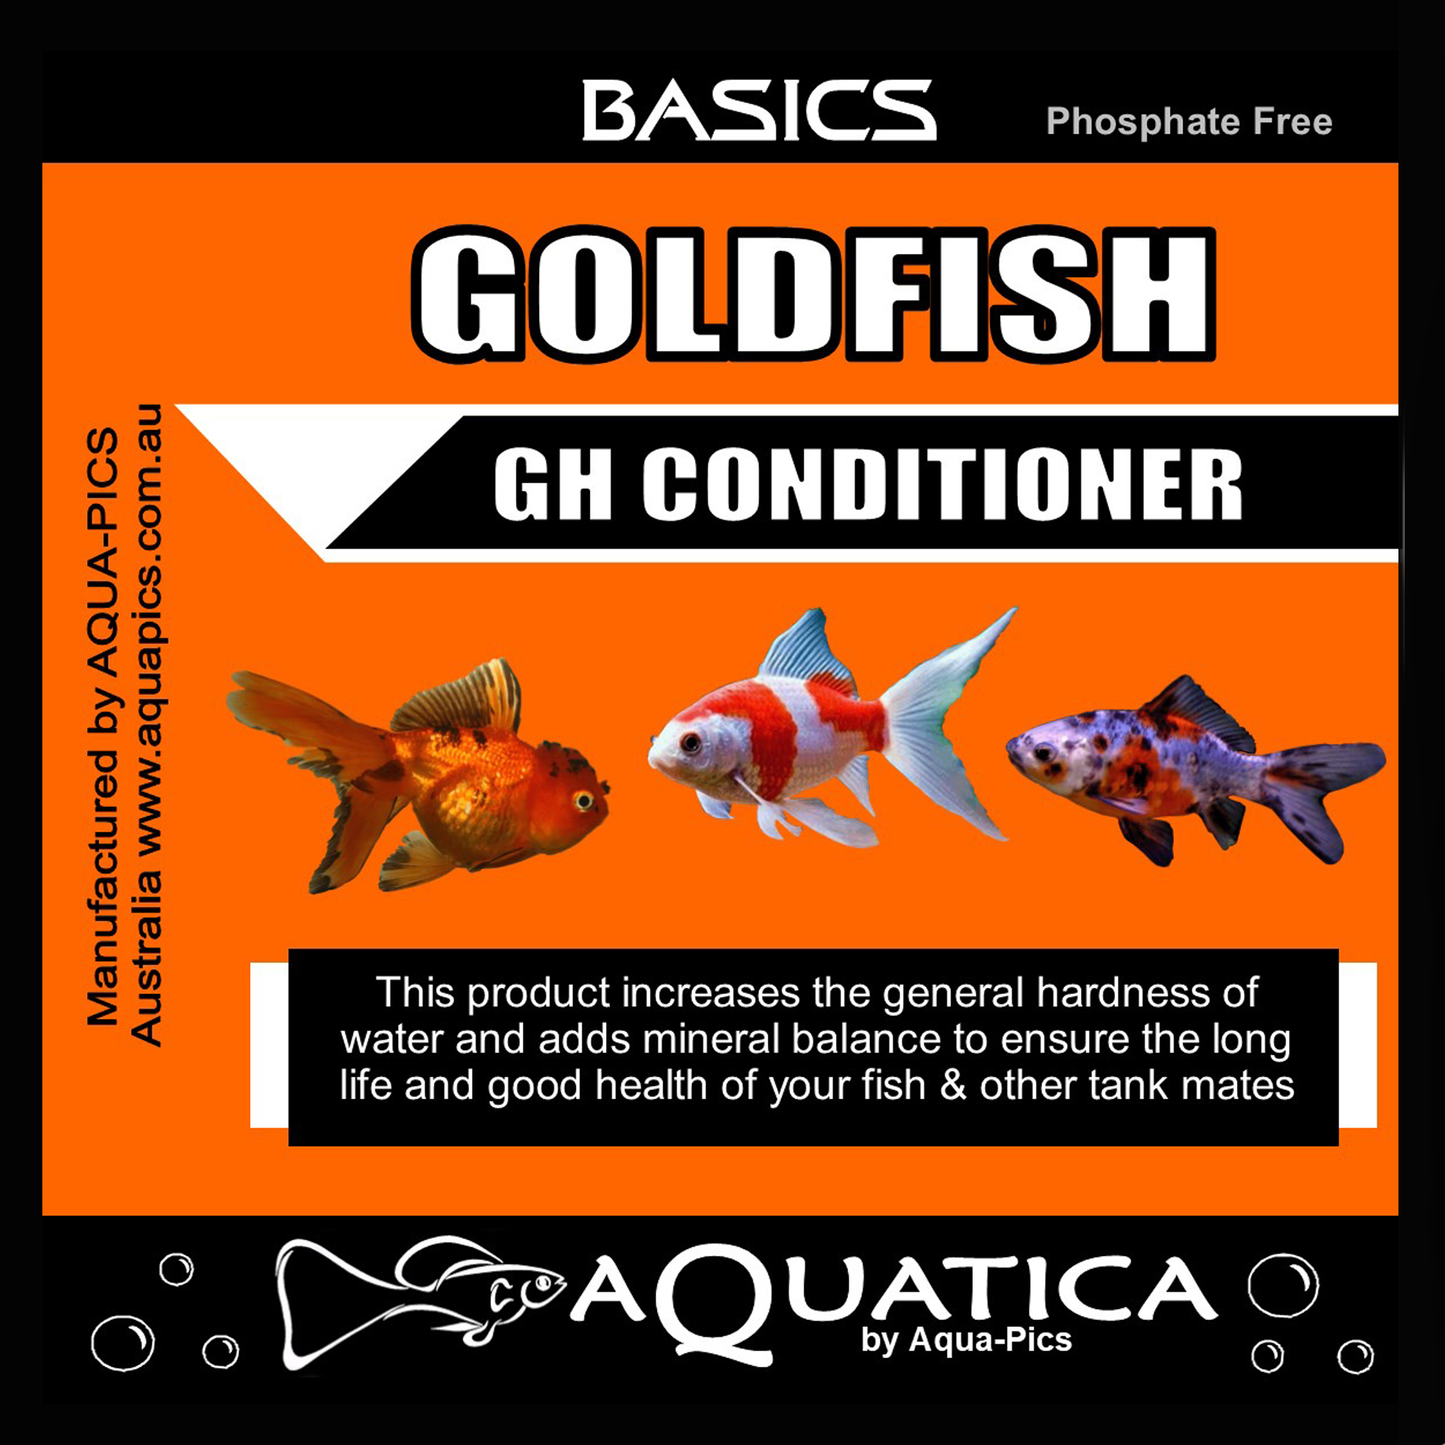 Aquatica Basics Goldfish GH Conditioner 250g bag